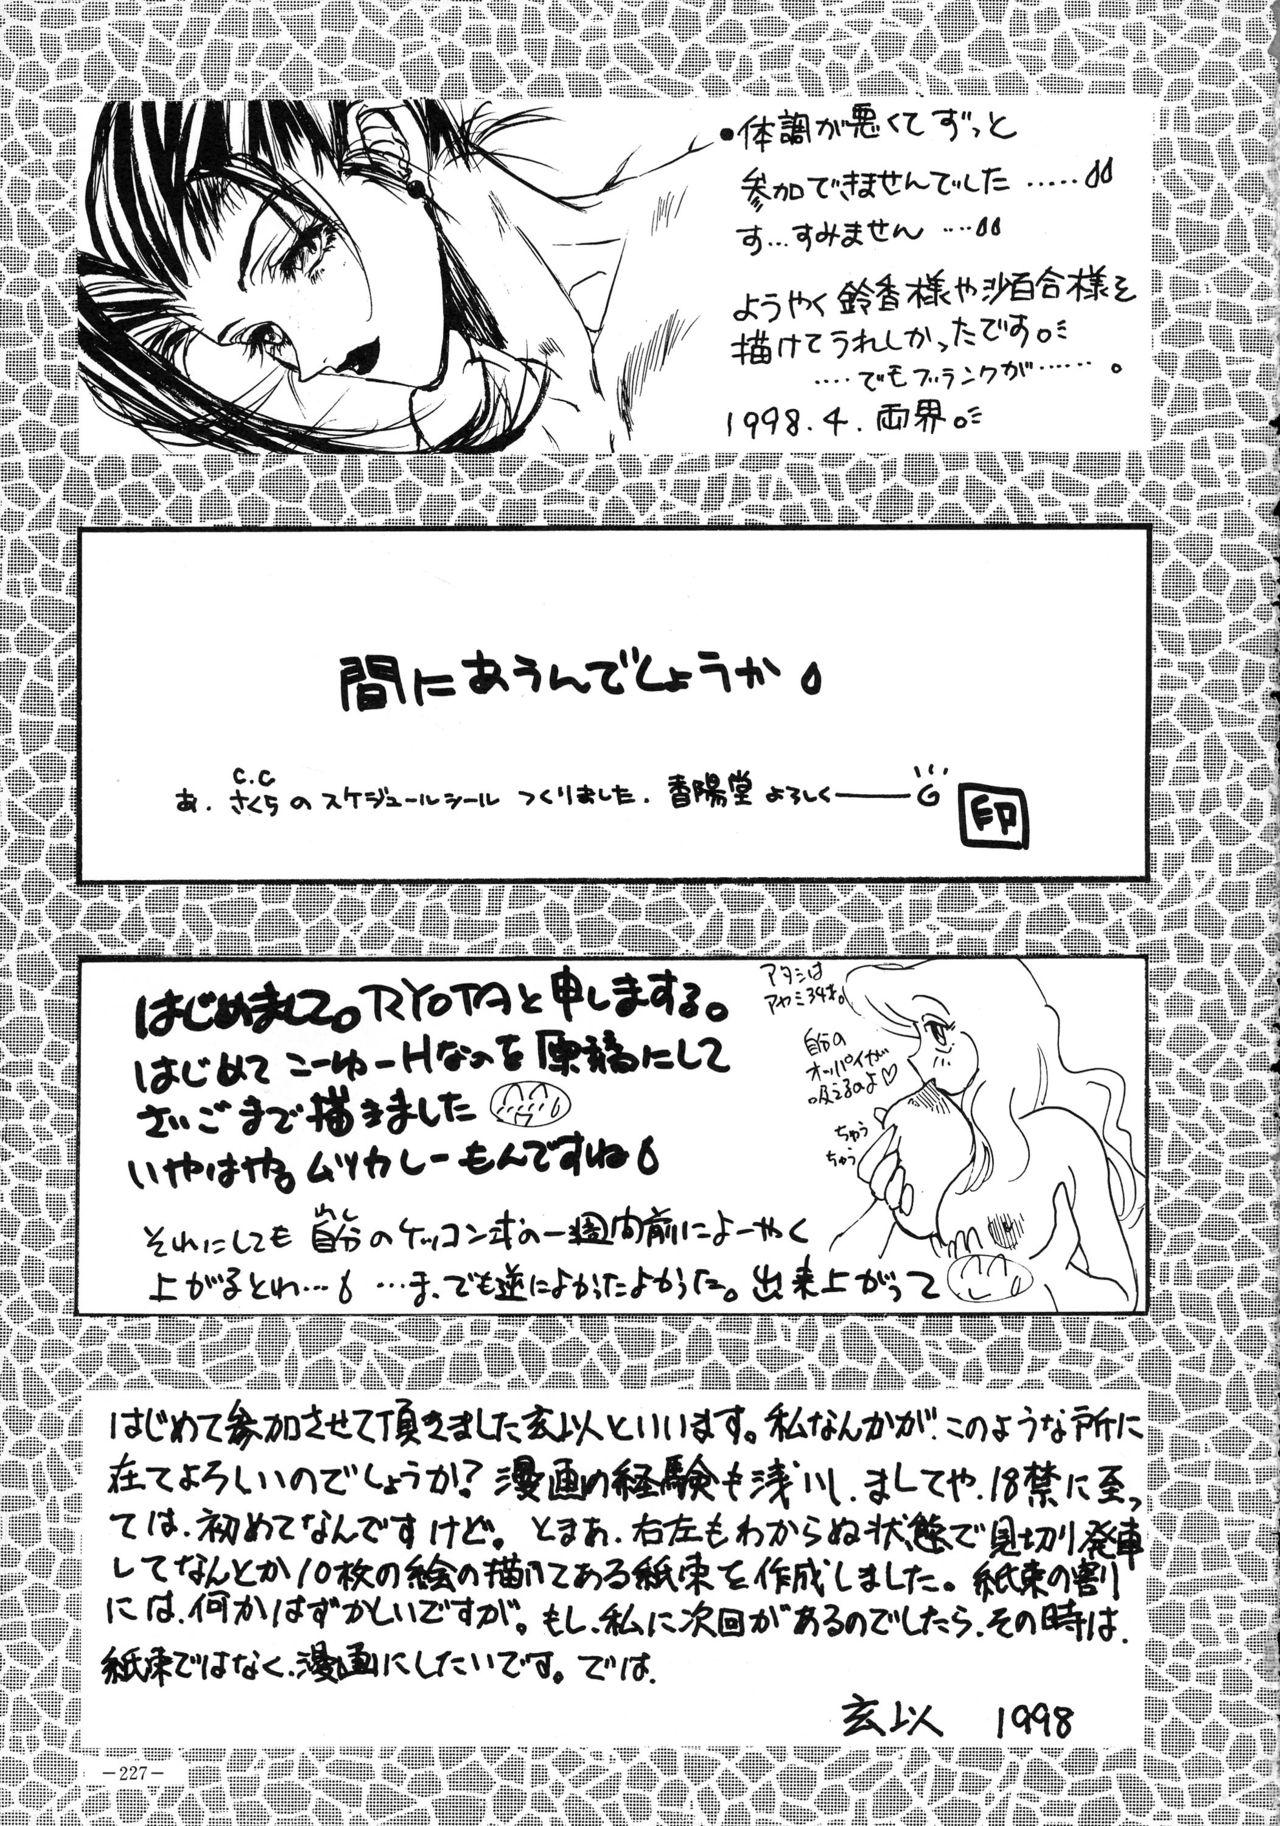 Rougetsu Toshi - Misty Moon Metropolis COMIC BOOK VIII 225